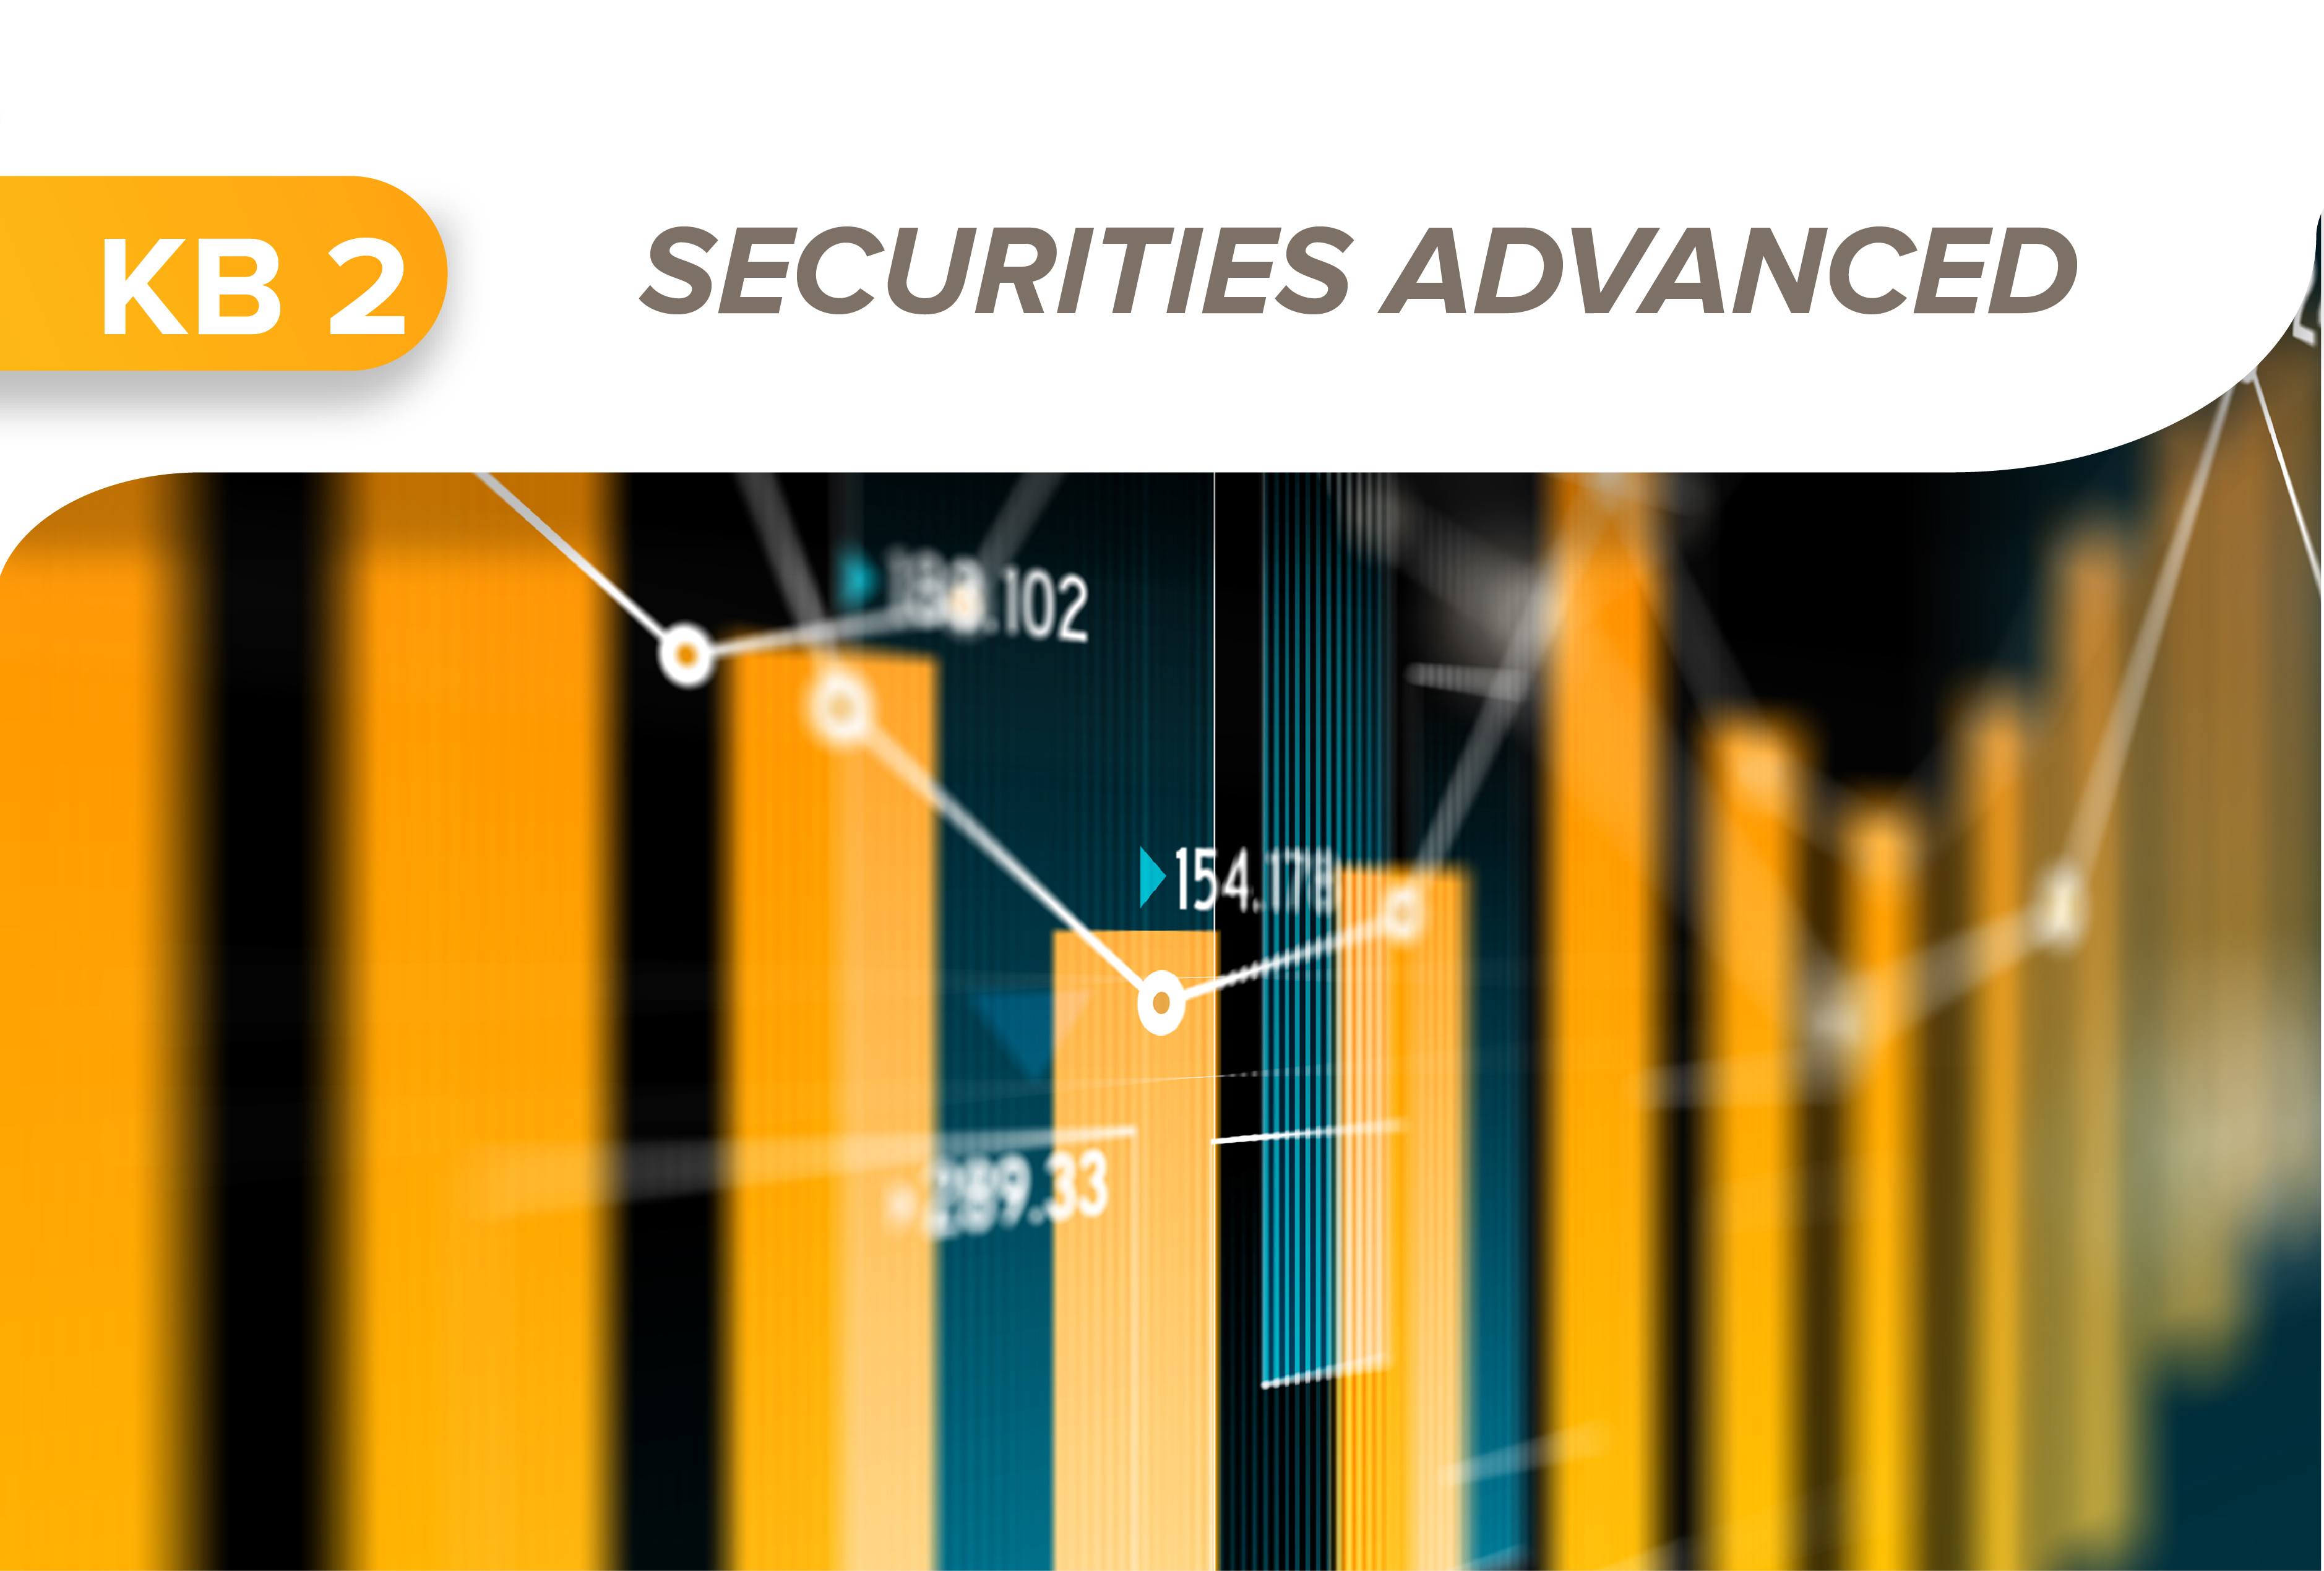  Securities advanced